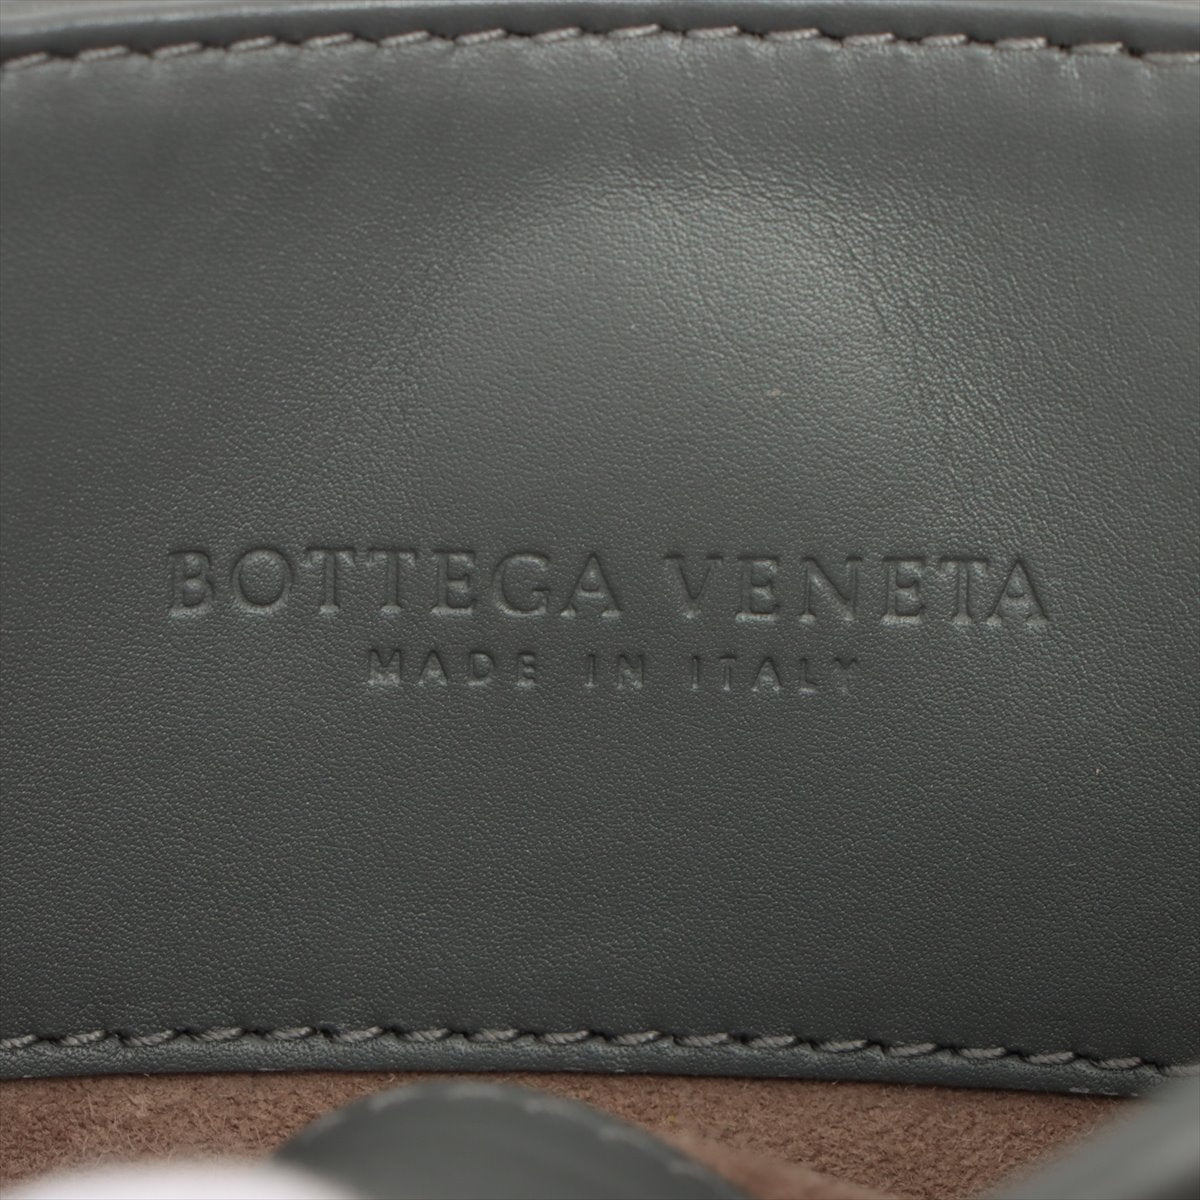 Bottega Veneta Intercept Rome 皮革 2WAY 單肩包 Gr